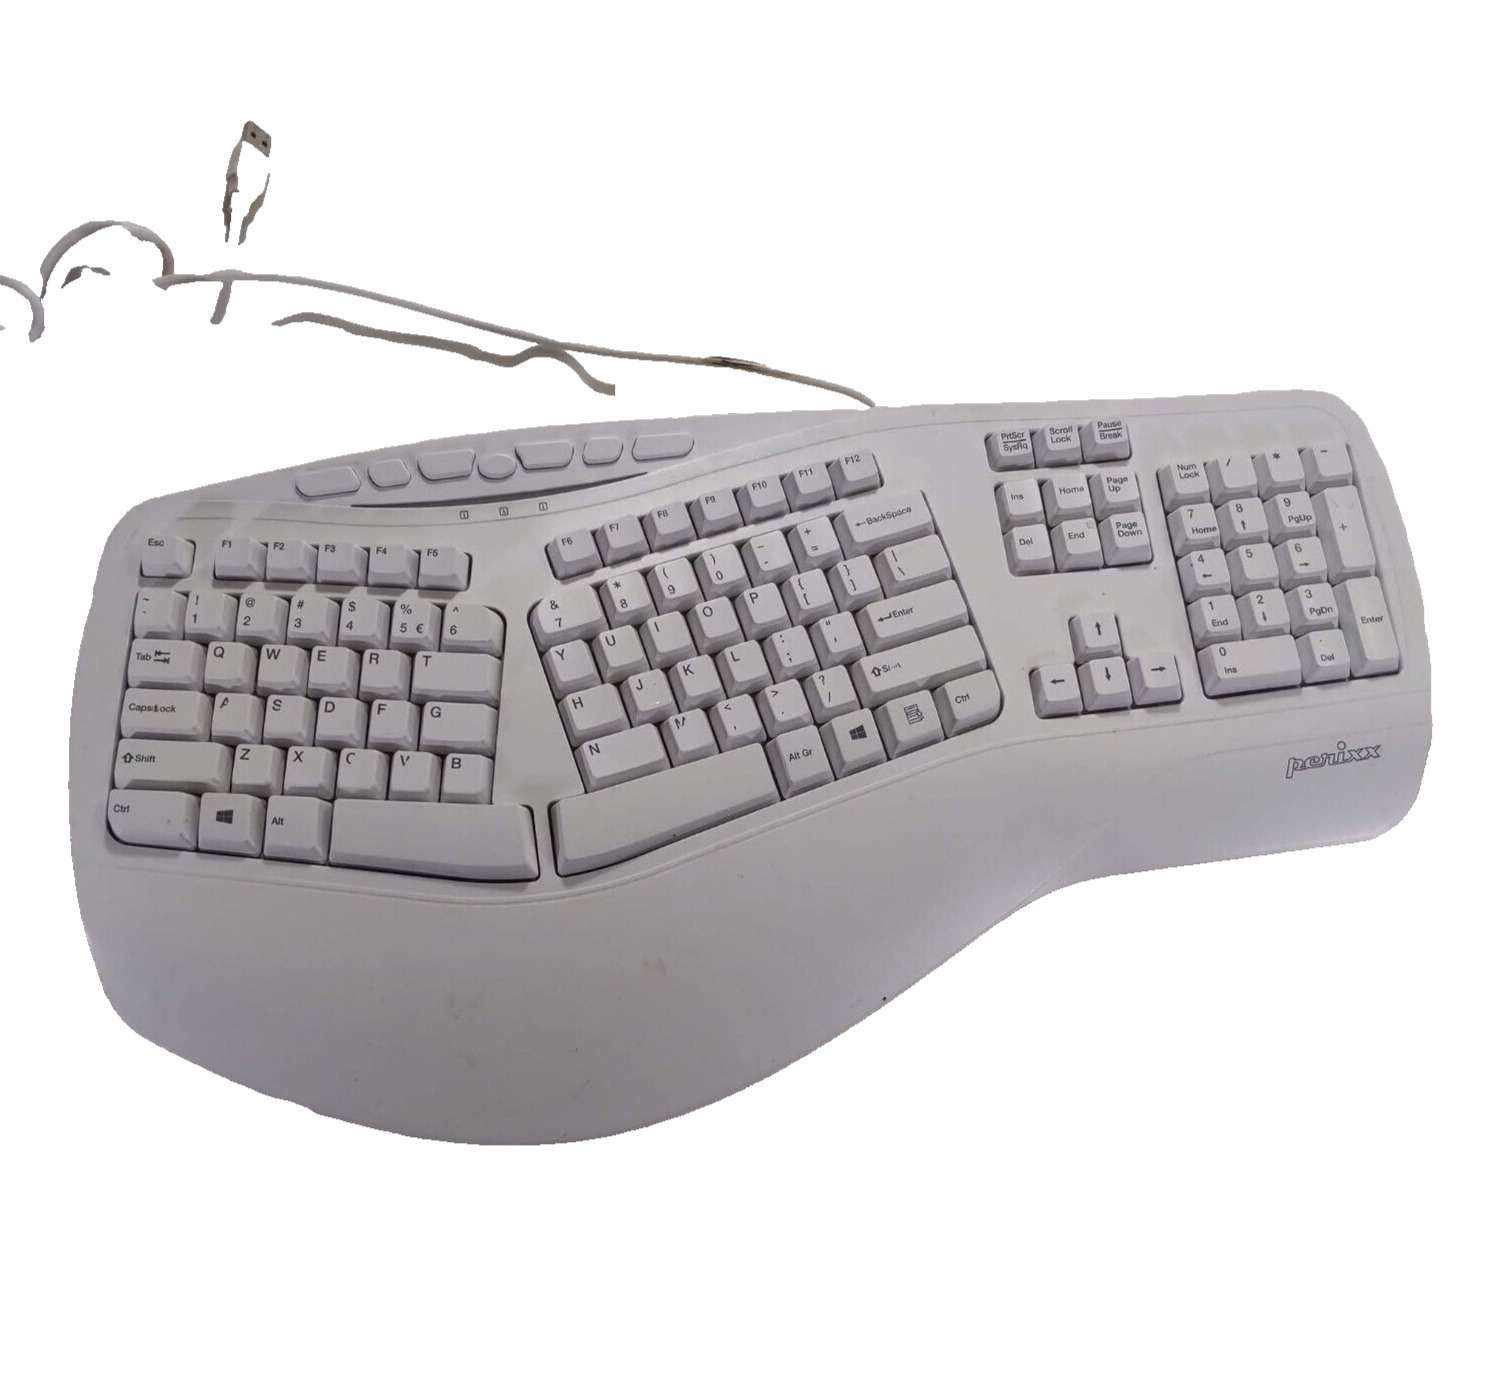 Perixx Wired Ergonomic Keyboard Periboard-512B White KB for Wrist Relief